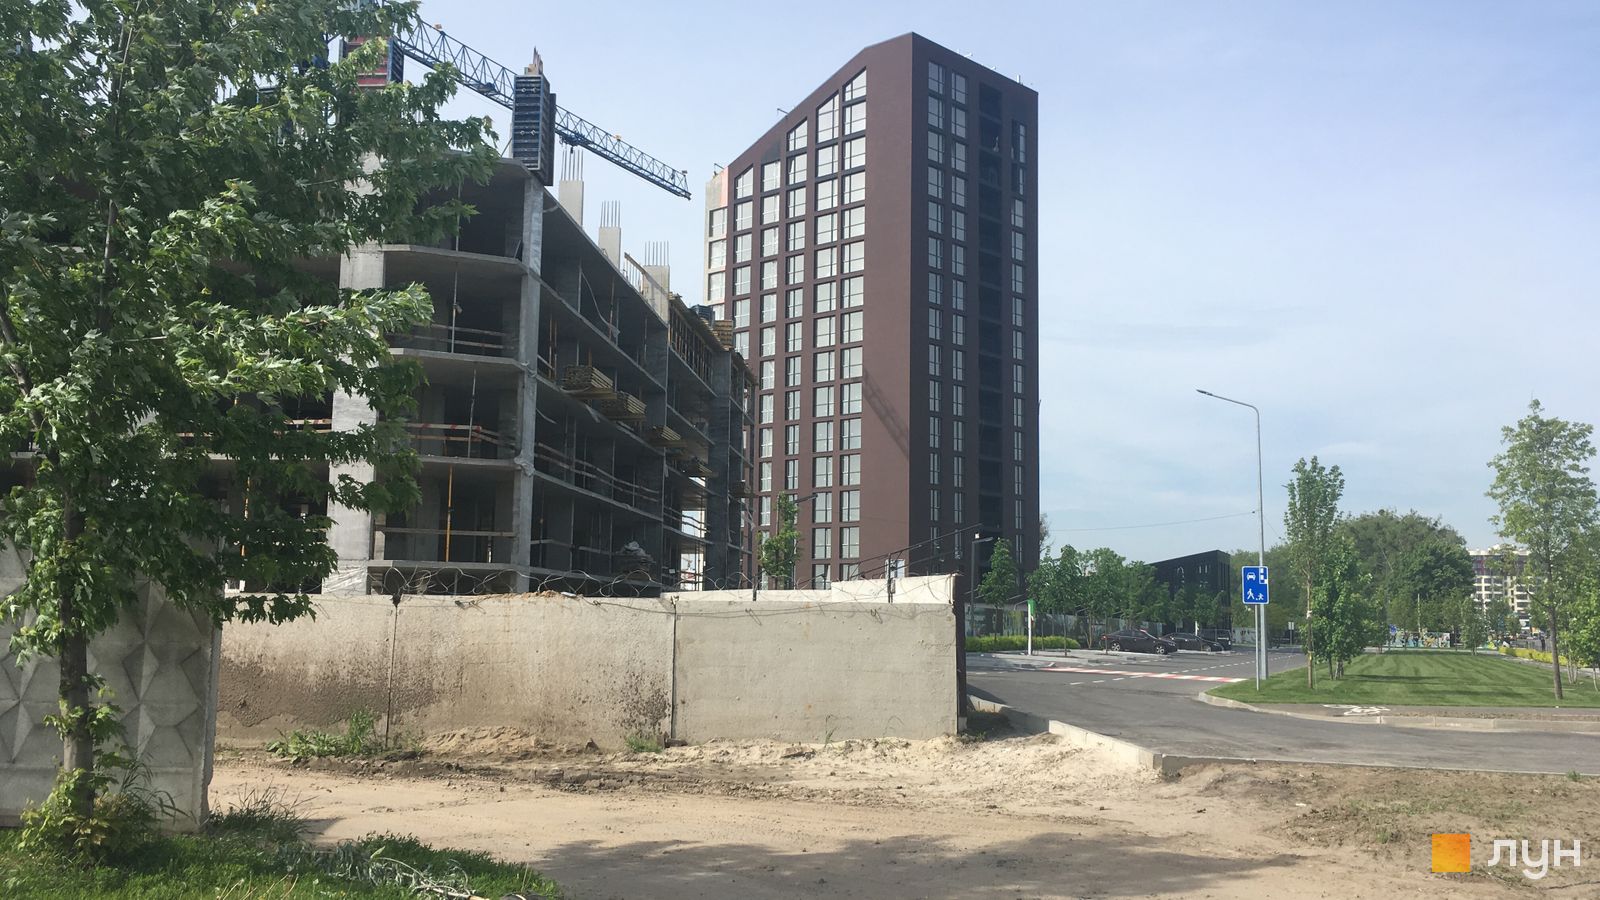 Моніторинг будівництва ЖК Paradise Avenue - Ракурс 1, травень 2019